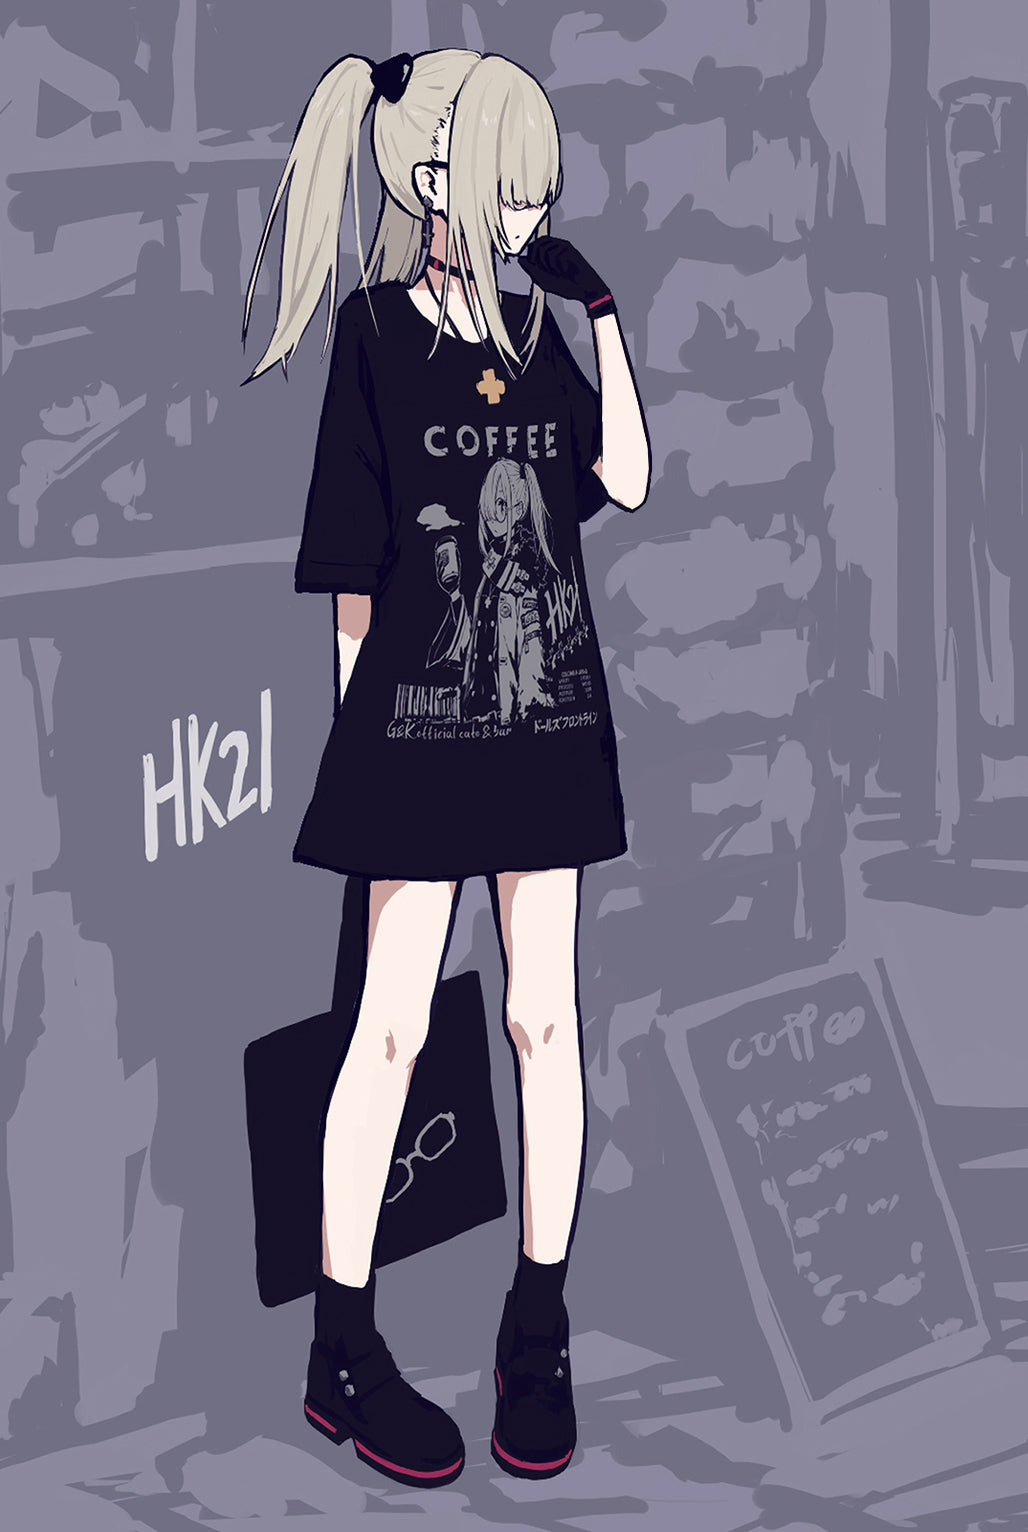 Girls' Frontline HK21 "COFFEE" Unisex T-Shirt - RustyHermit